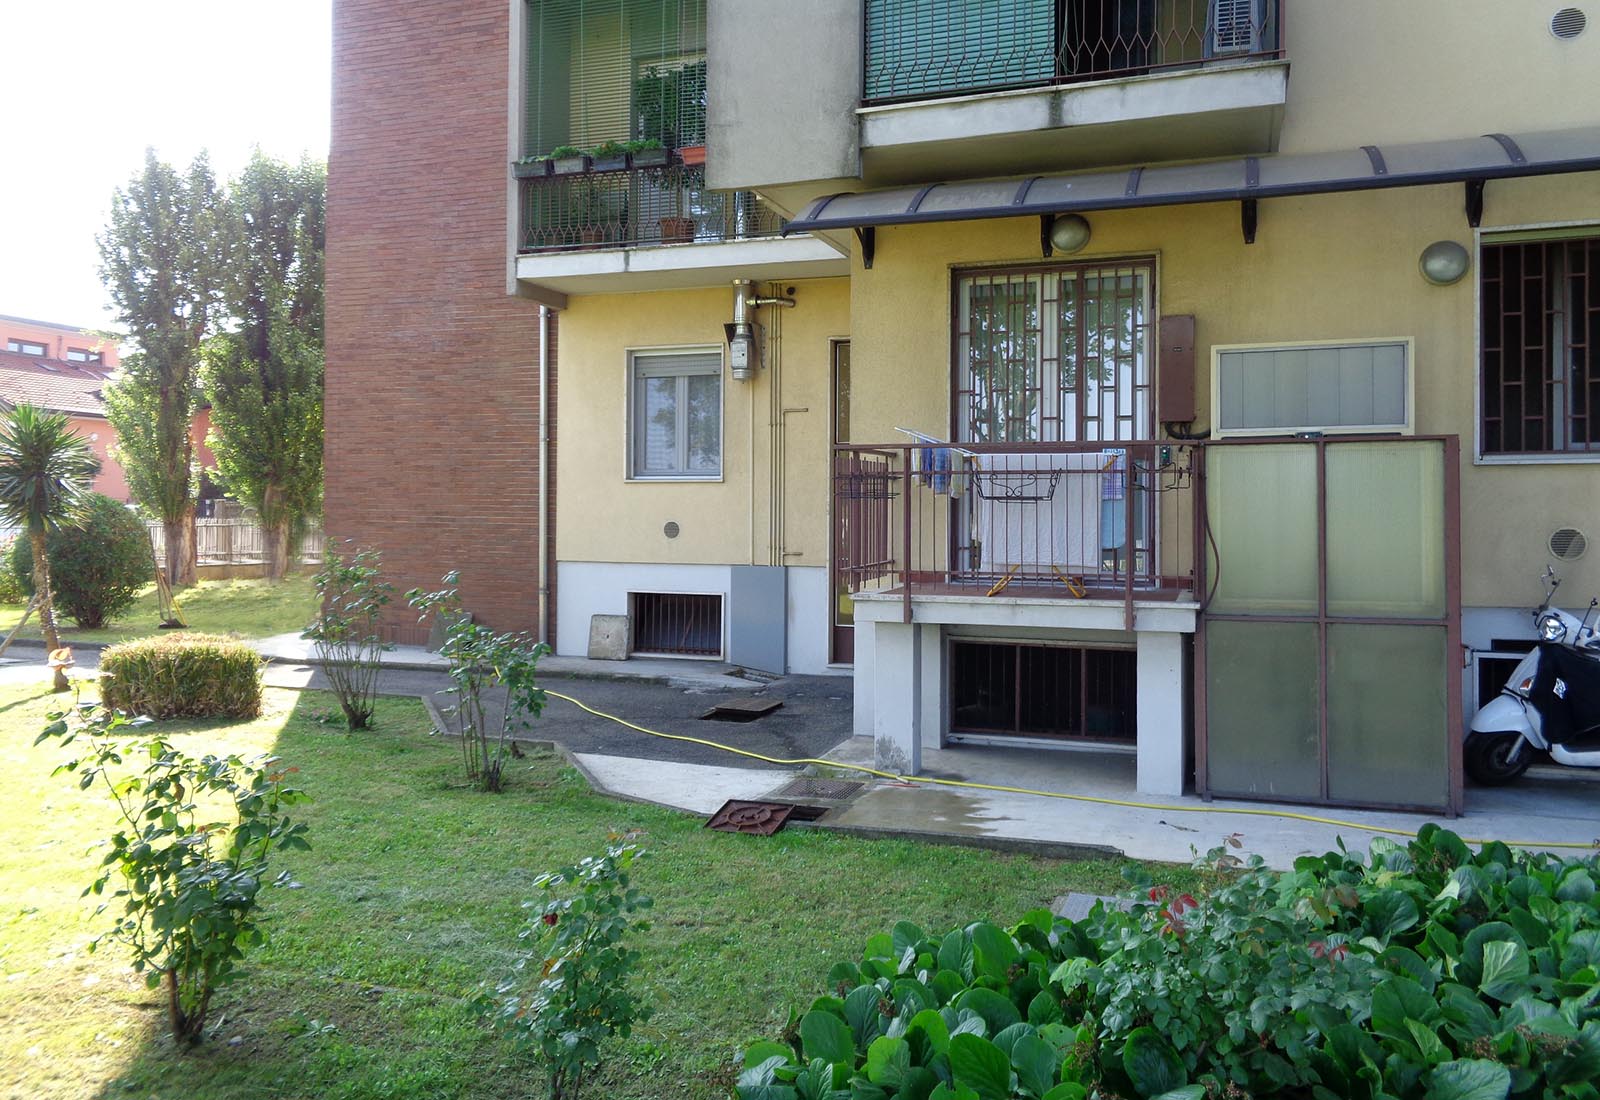 Apartment building in Tito Speri street in Rho - View